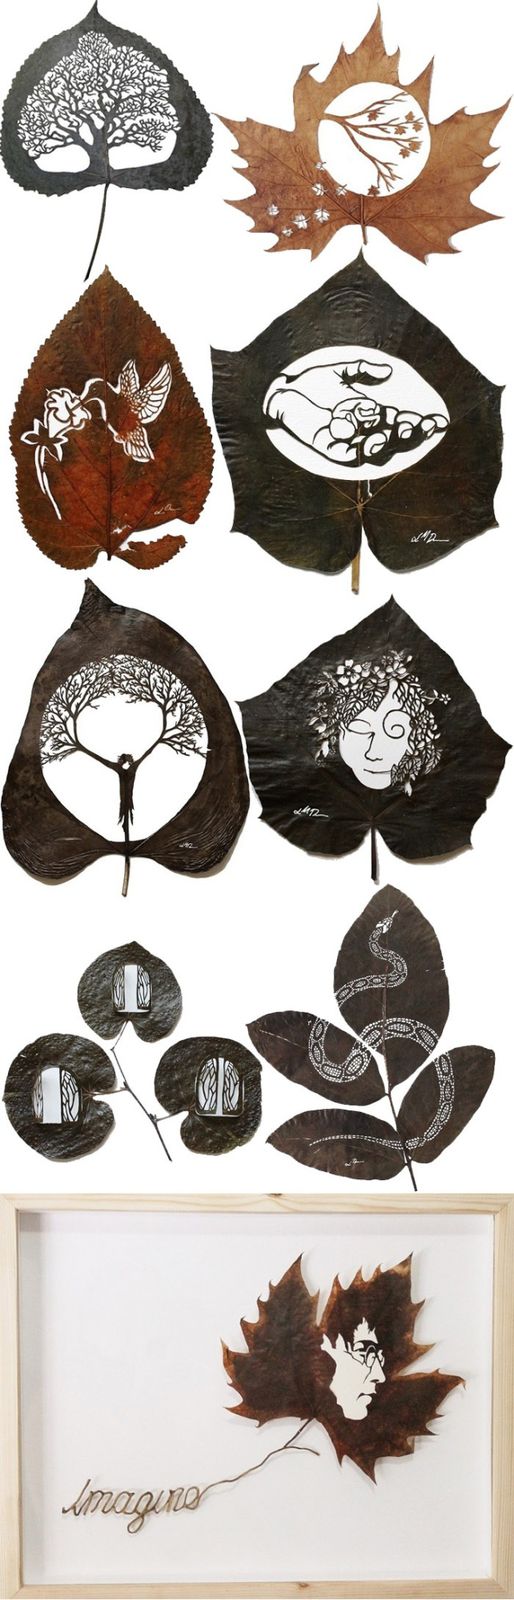 Les feuilles de Lorenzo Duran